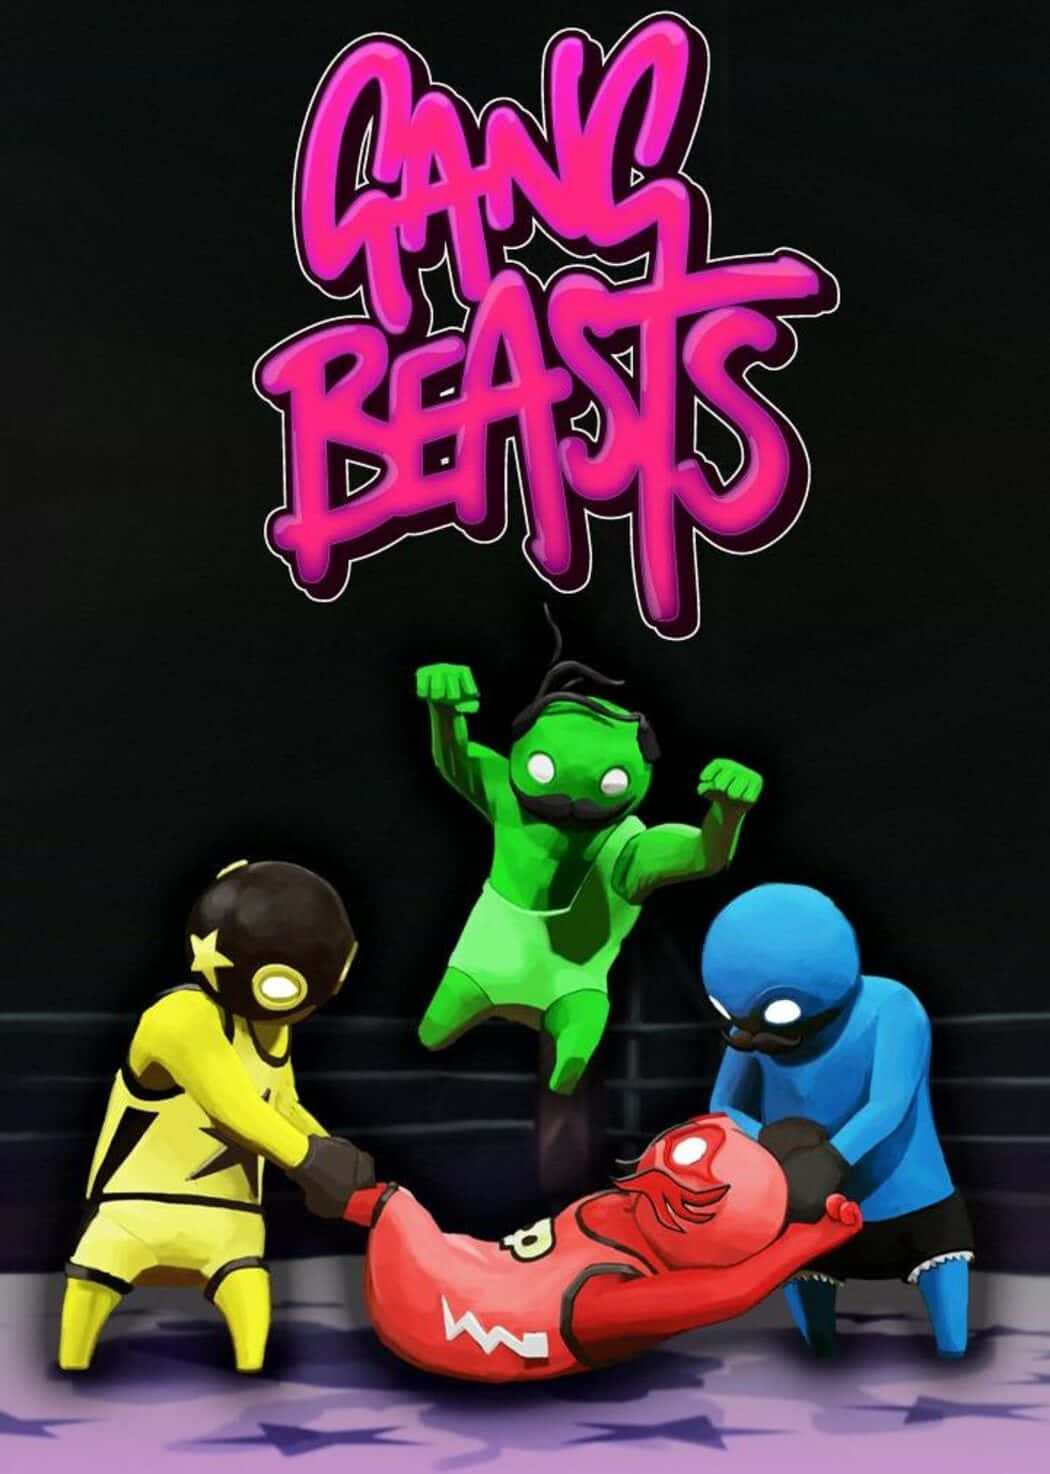 Gang Beasts - Bildschirmfotos Wallpaper